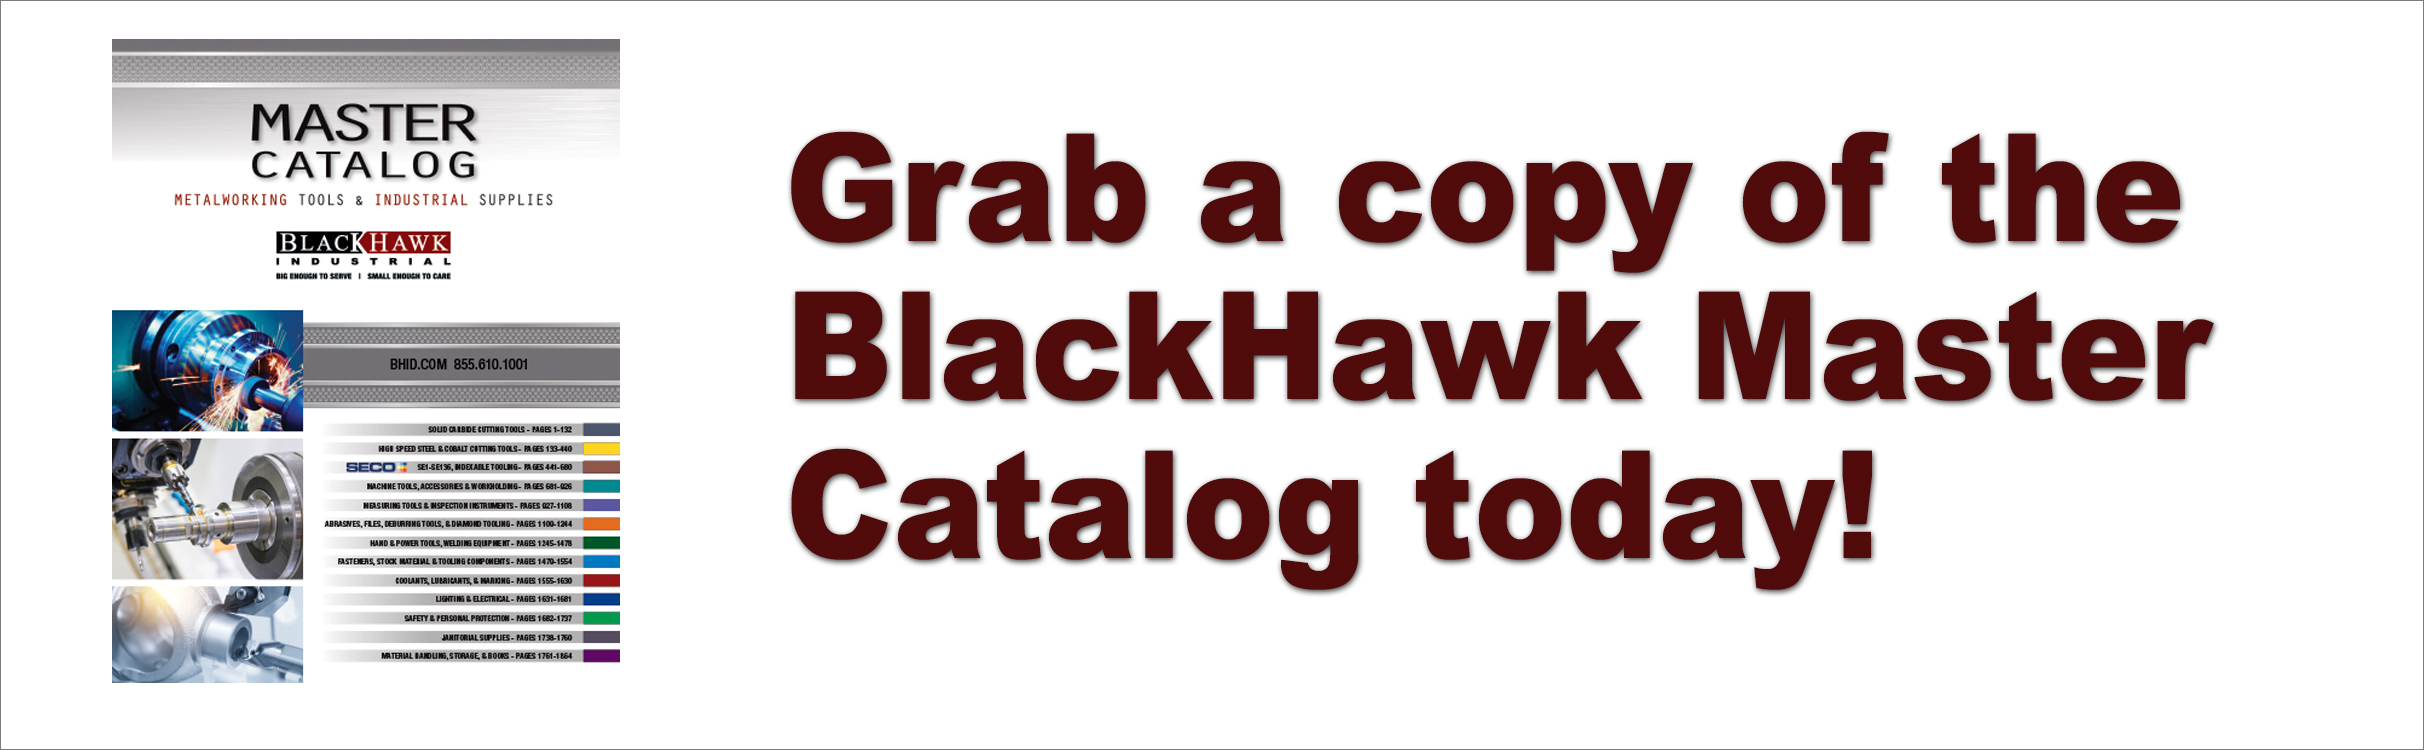 Grab a copy of the BlackHawk Master Catalog today!